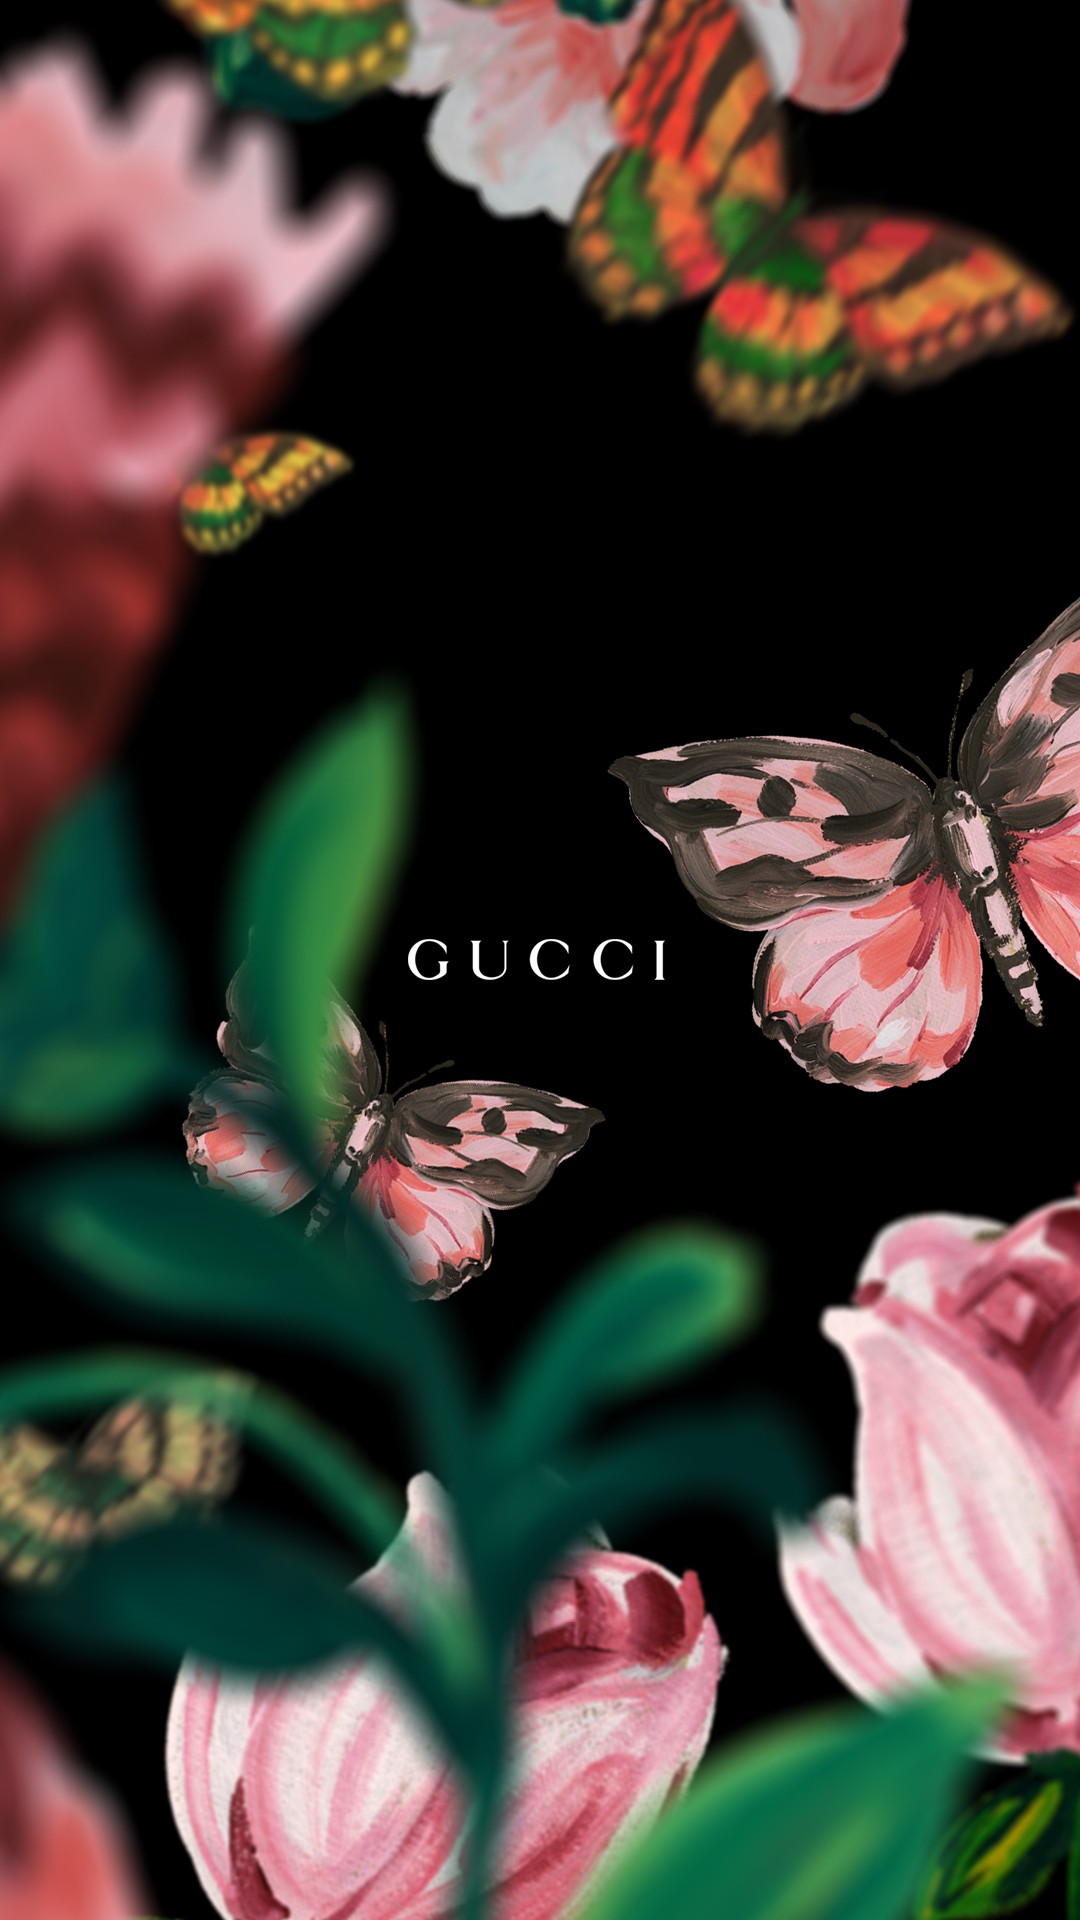 Gucci 1080P 2K 4K 5K HD wallpapers free download  Wallpaper Flare